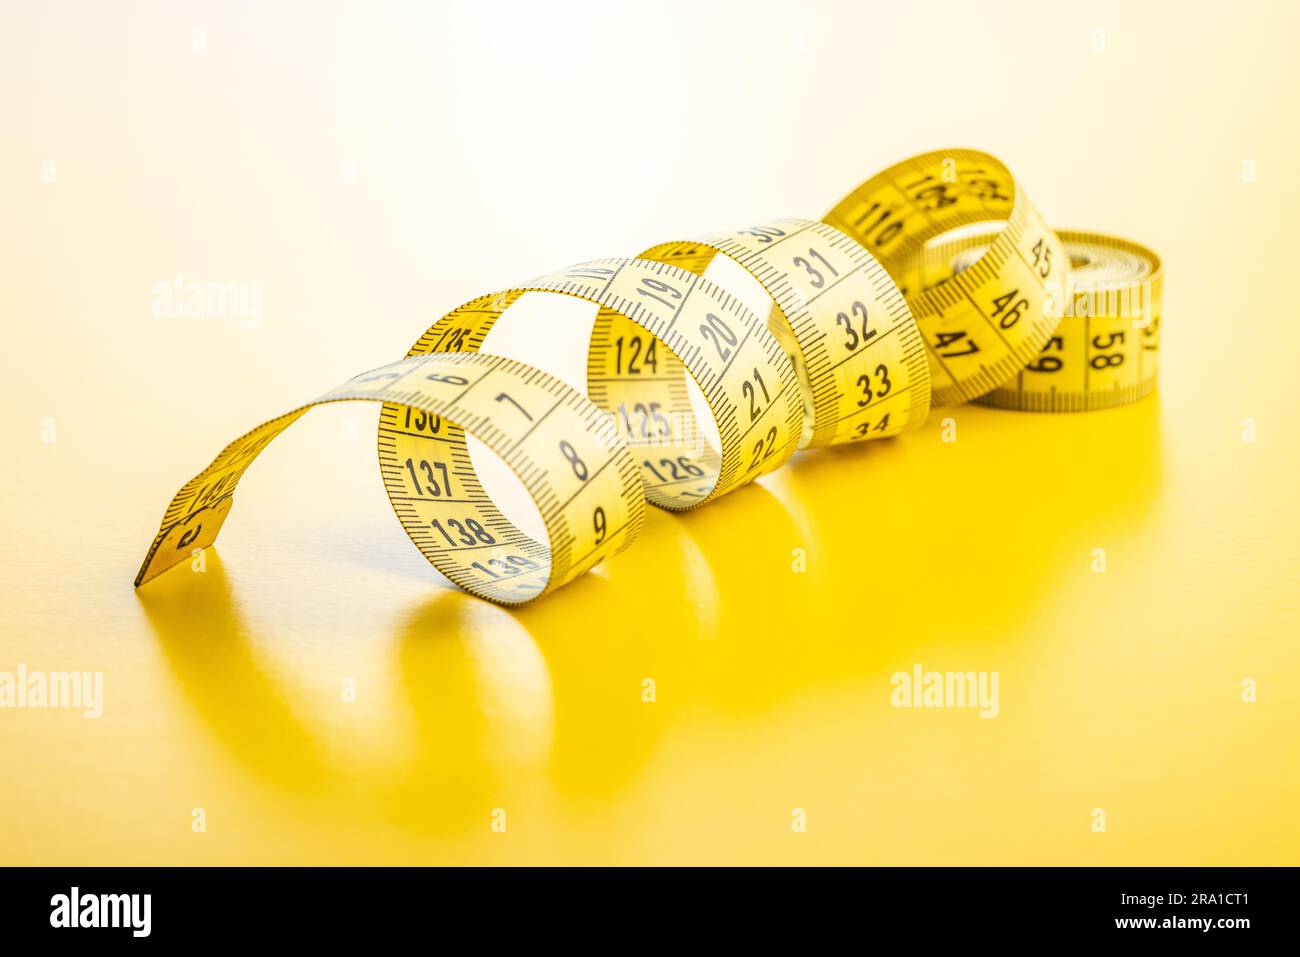 Yellow flexible tape measure Stock Photo - Alamy